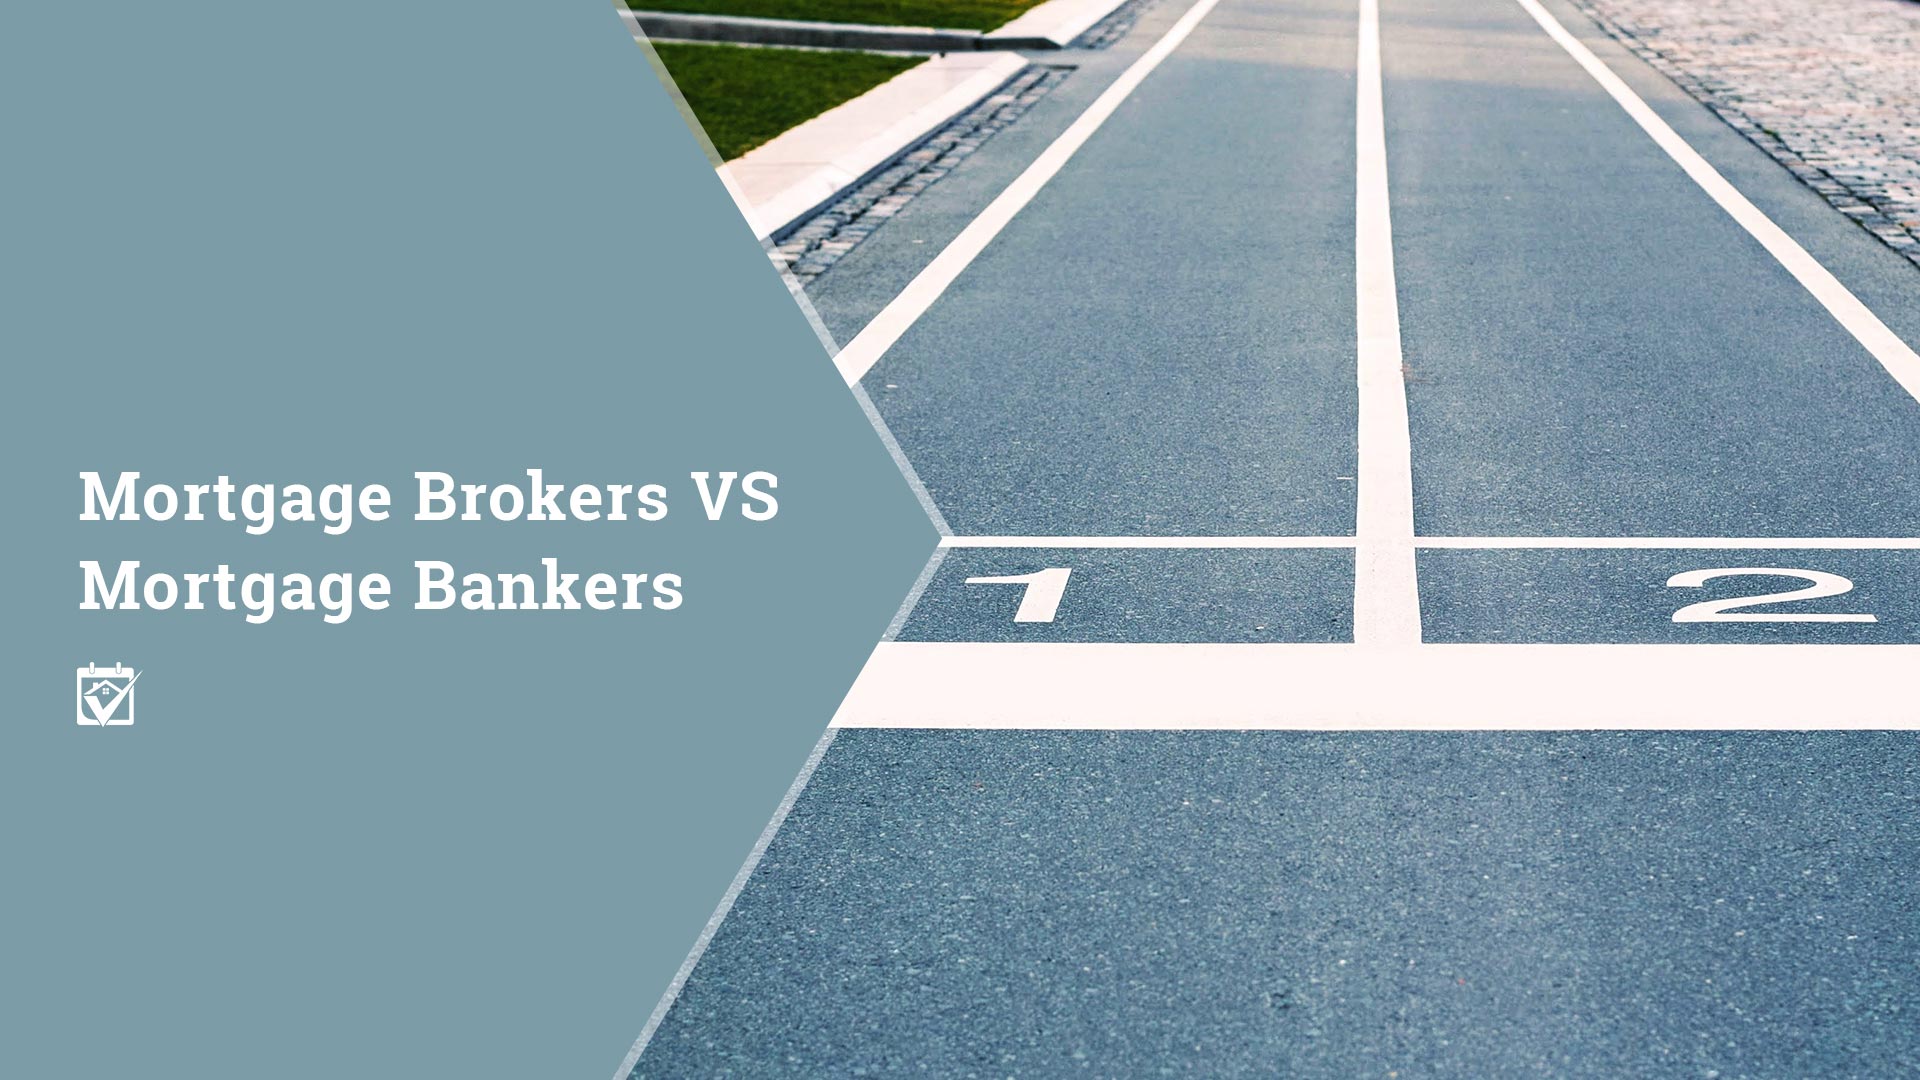 Mortgage Brokers VS Mortgage Bankers